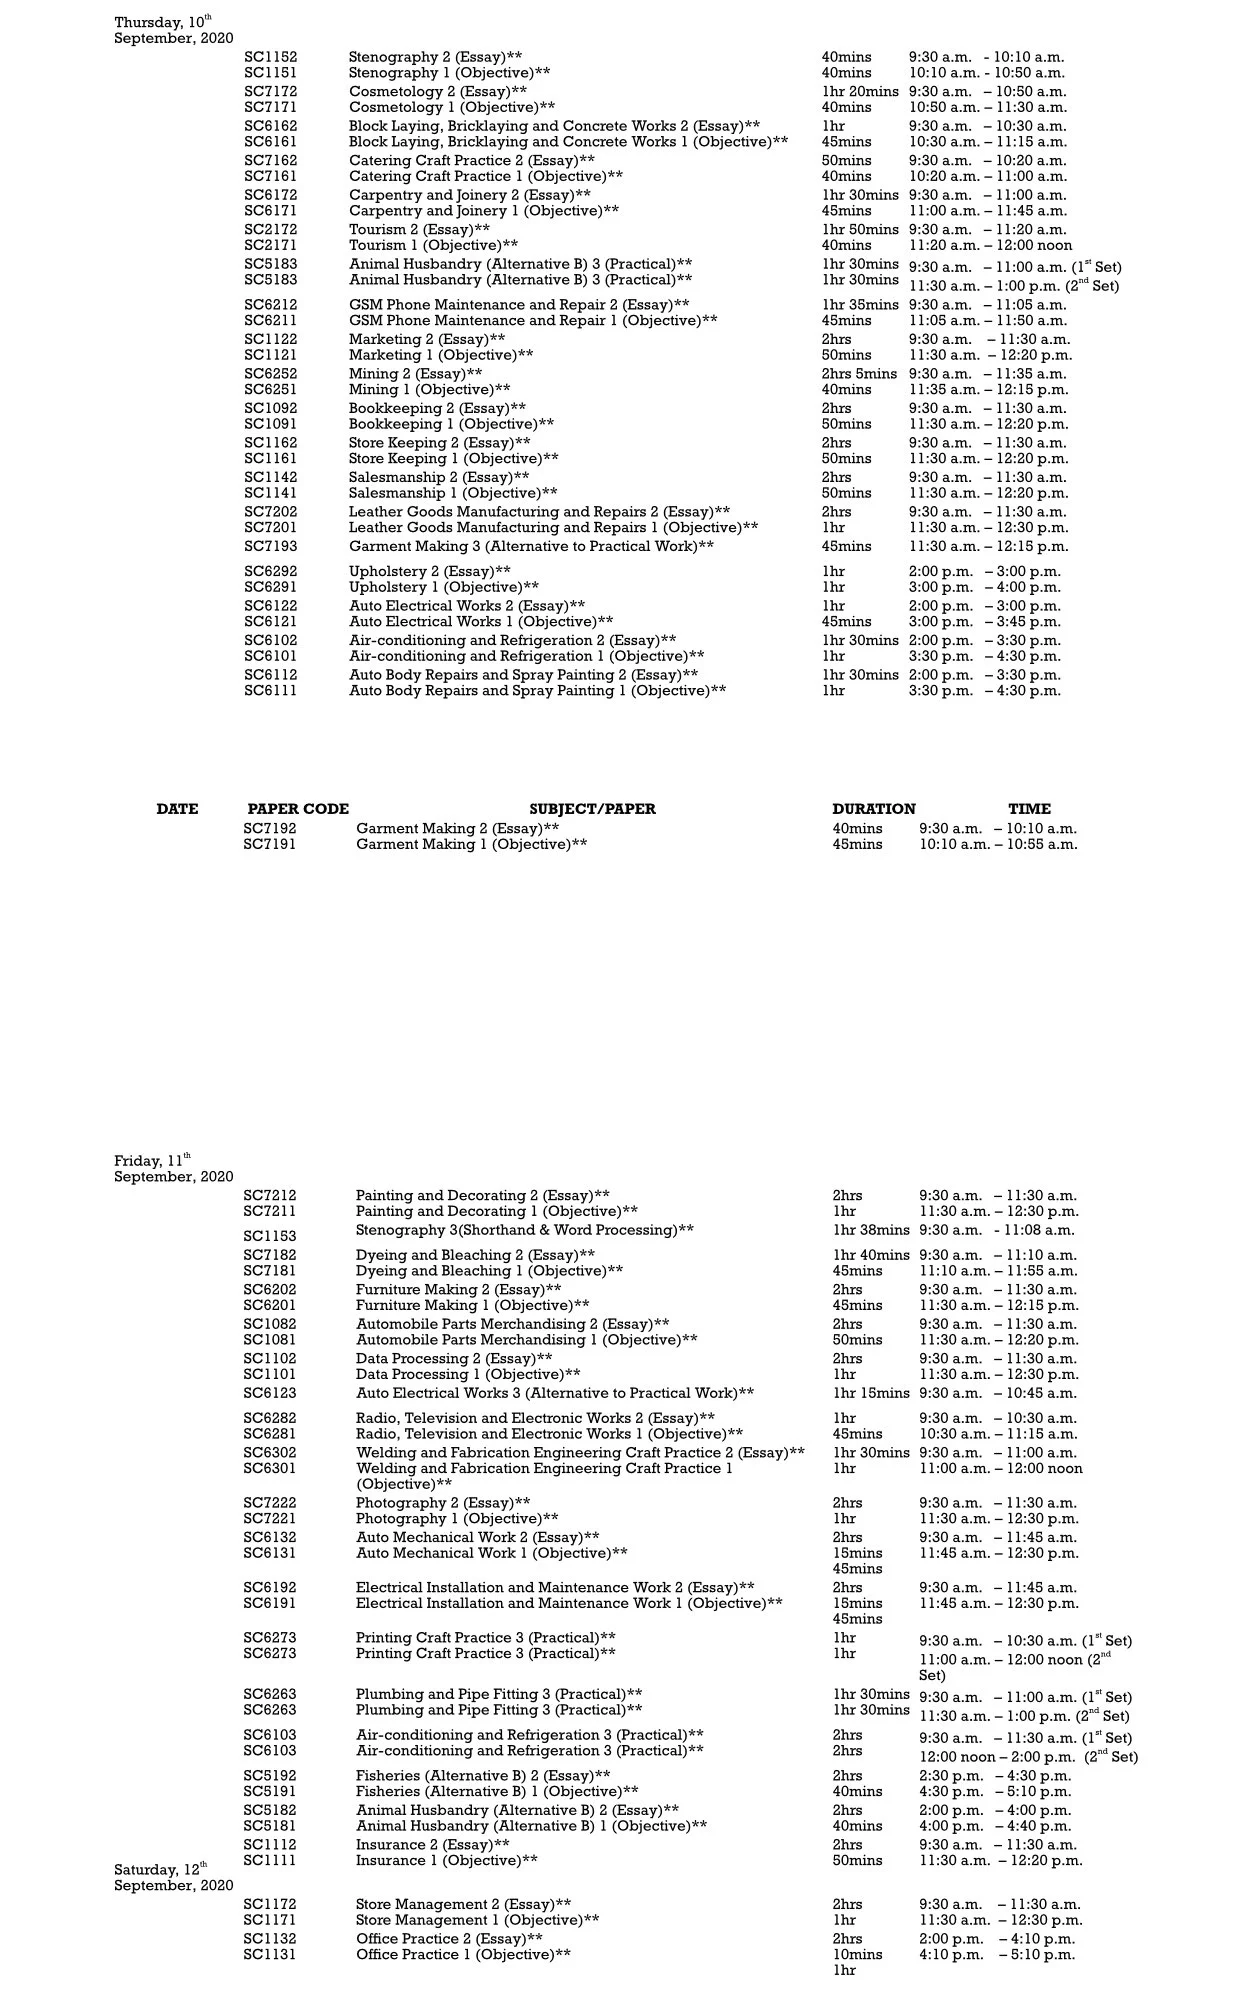 waec timetable 2020